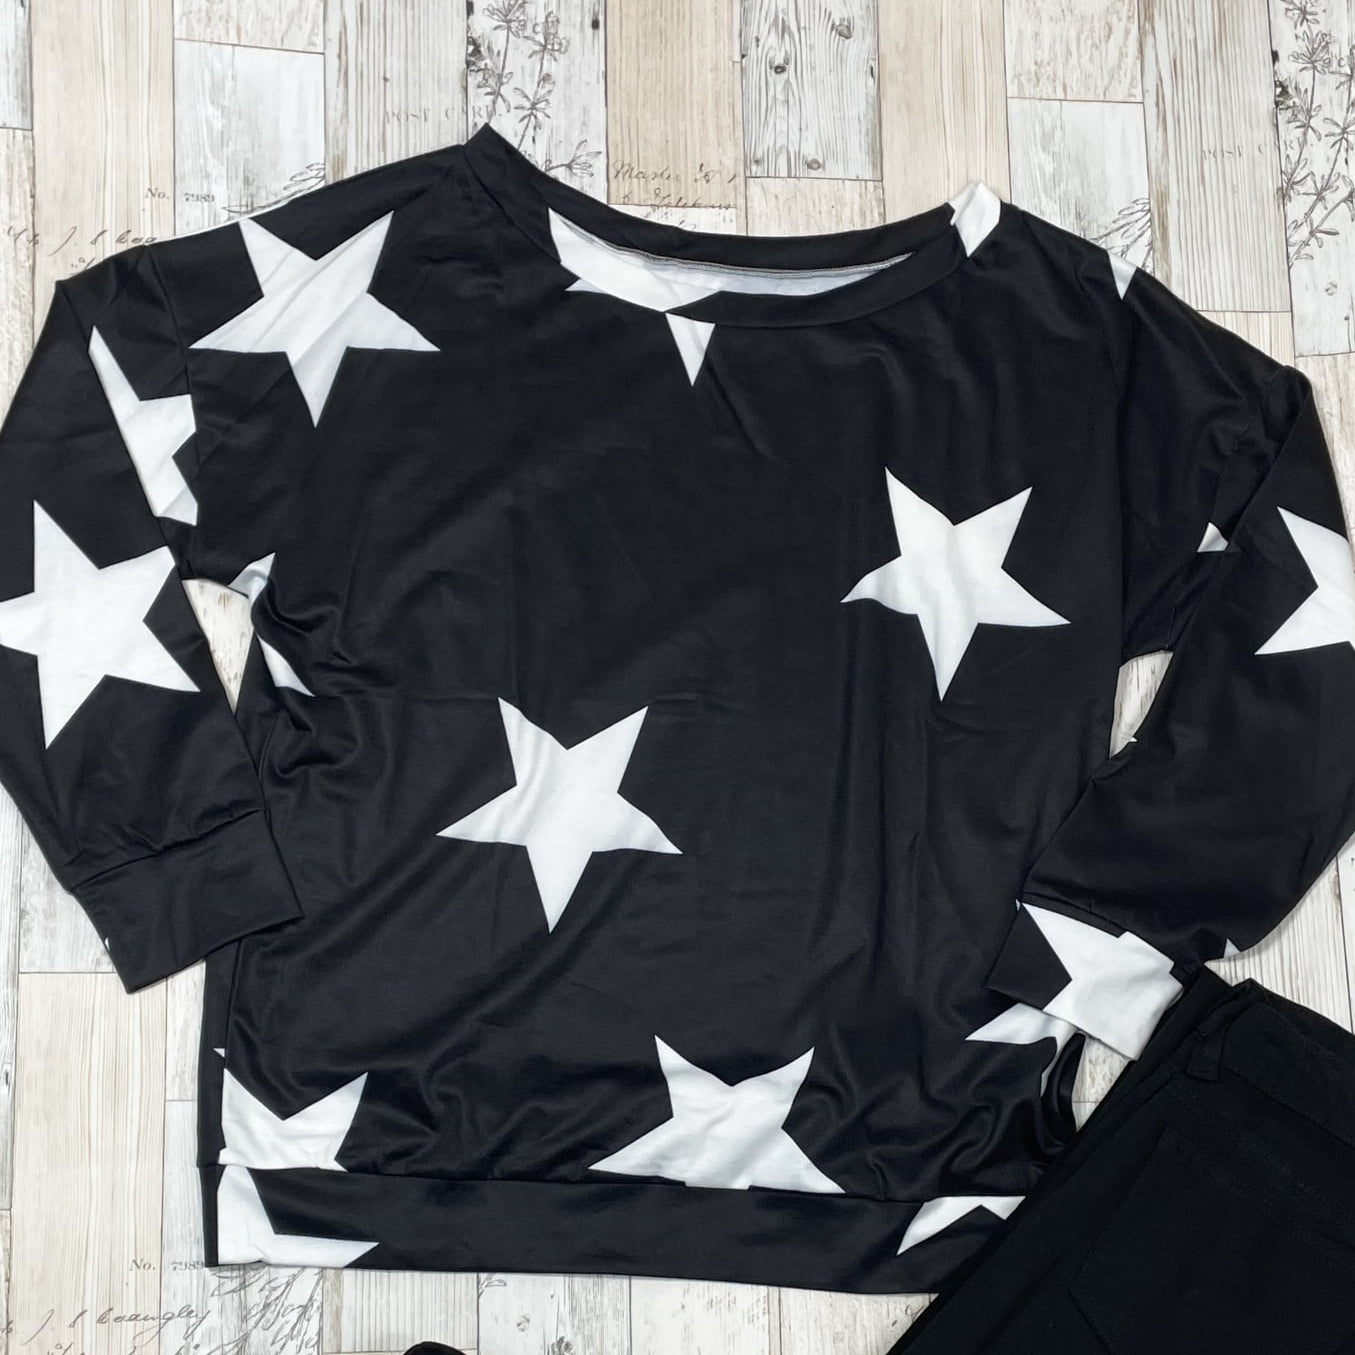 Black and White Star Print Sweatshirt - Sassy Chick Clothing